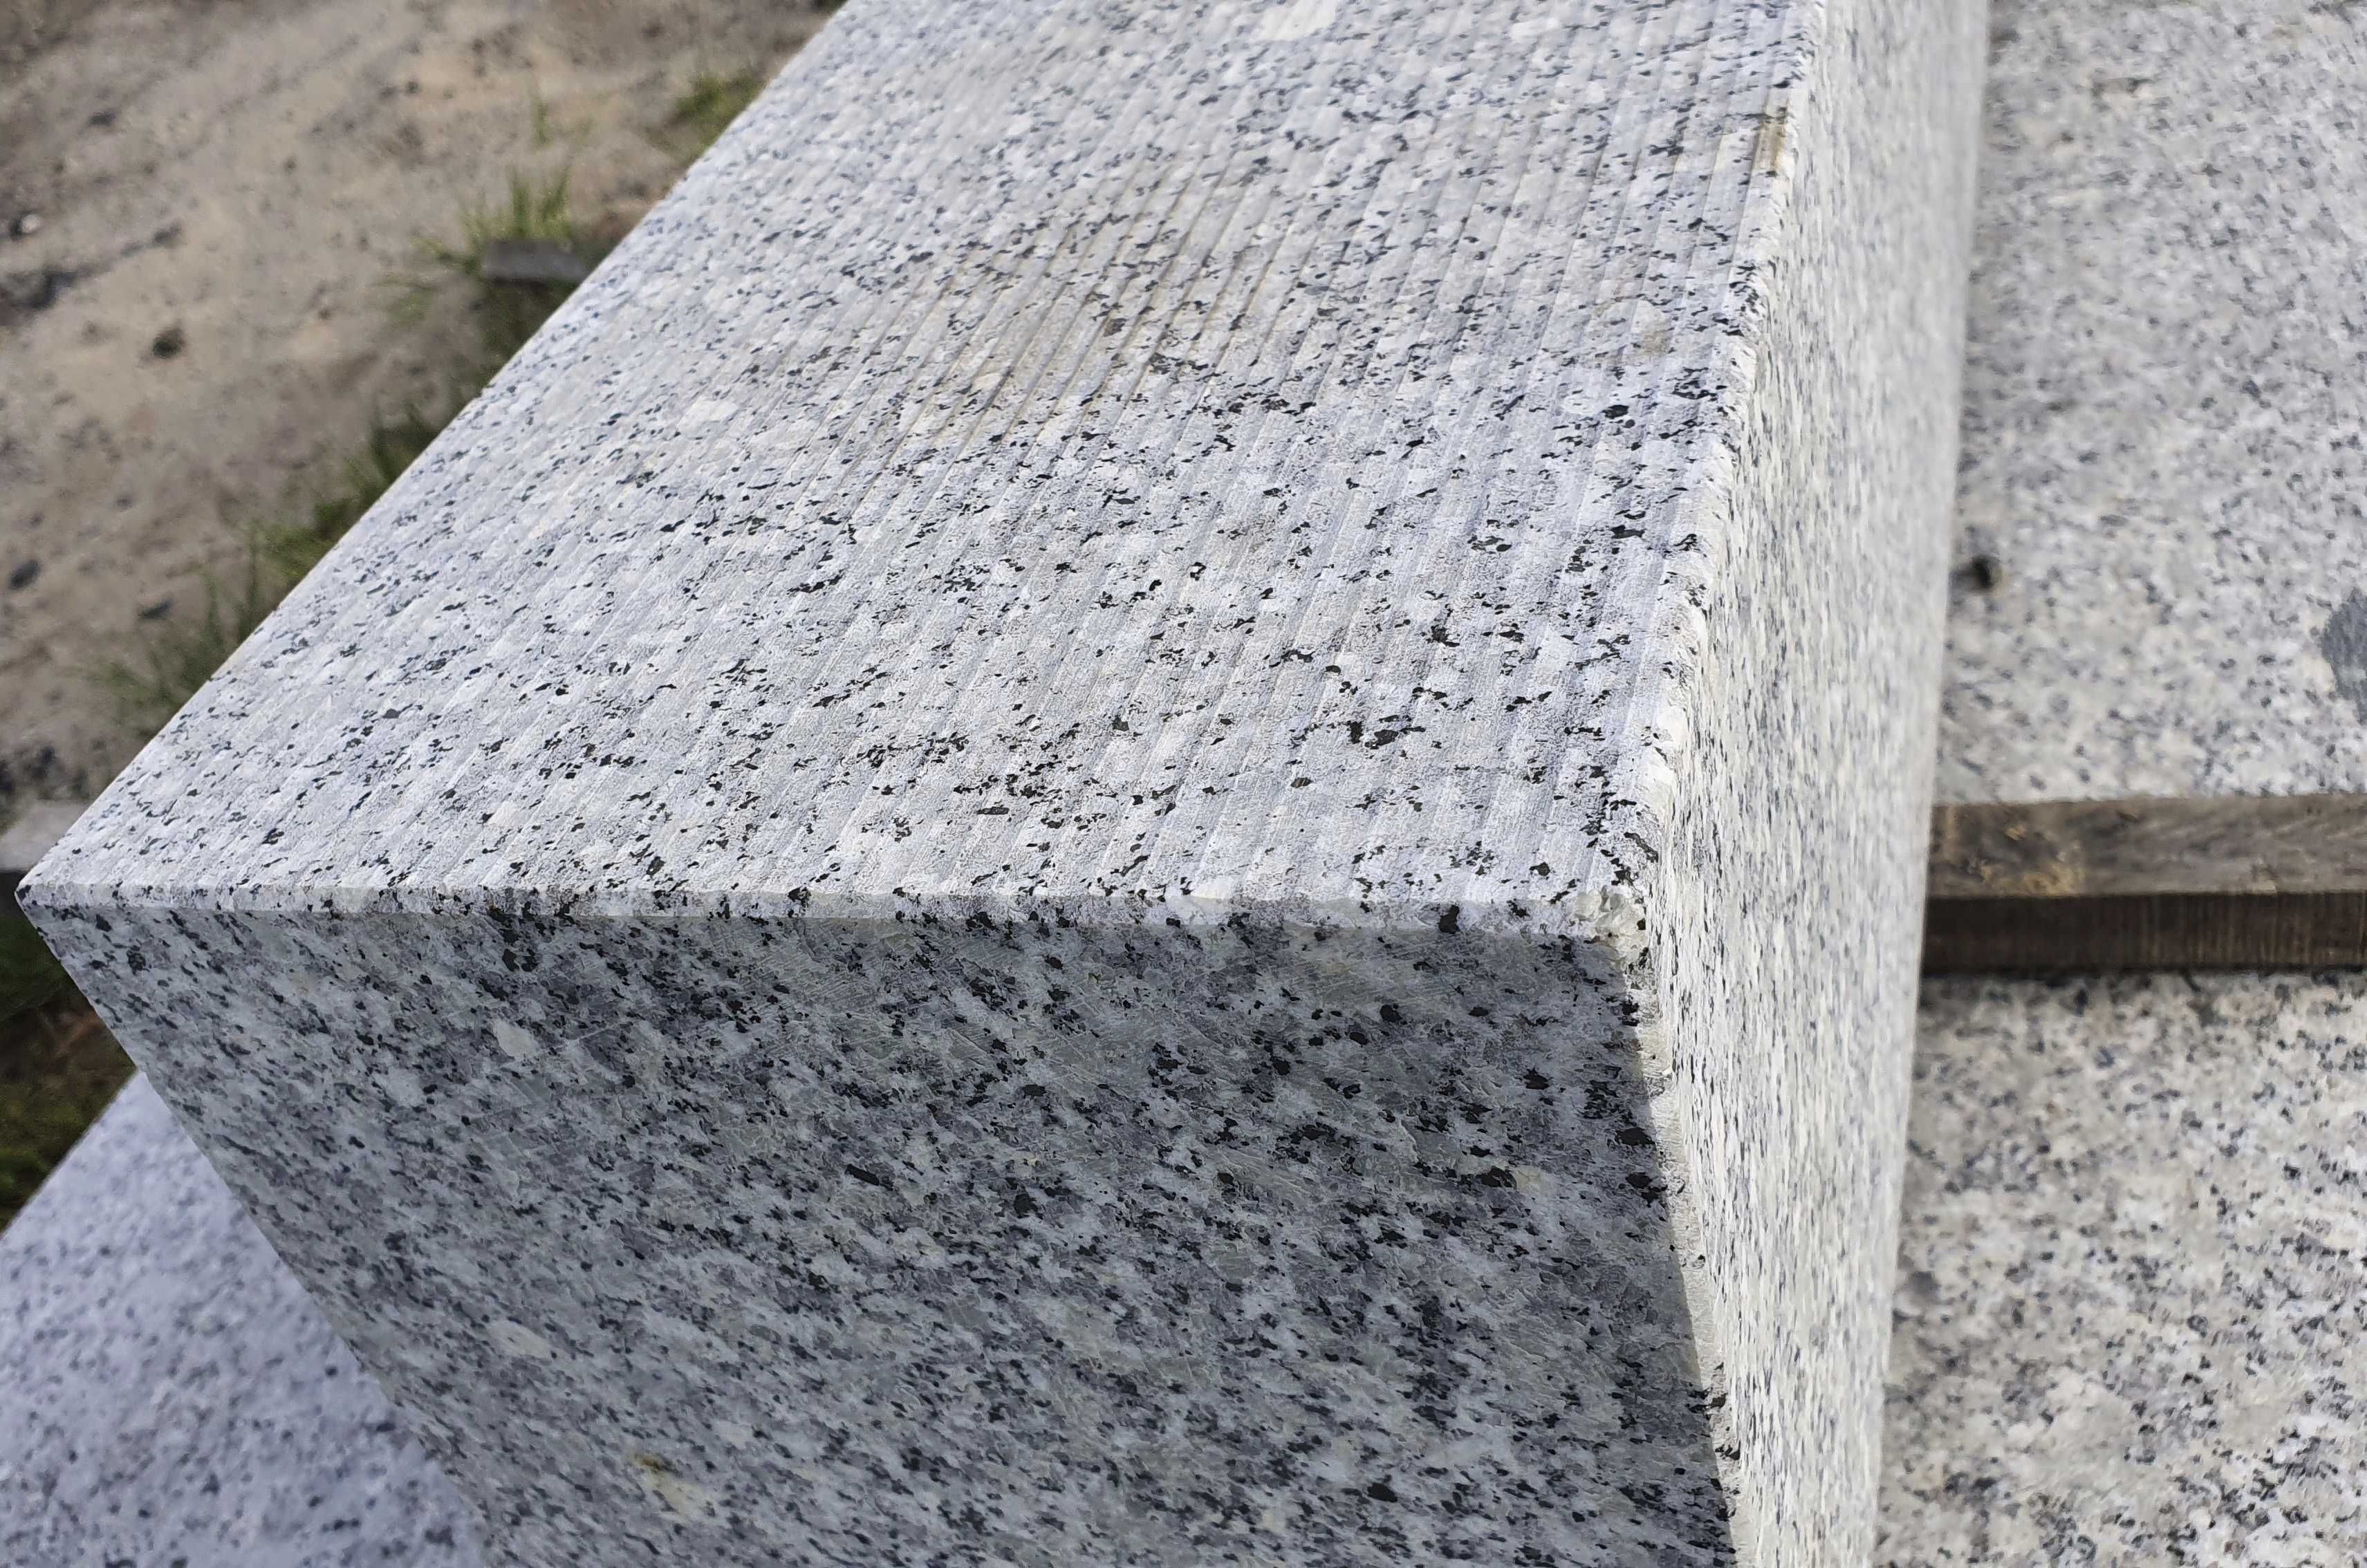 Schody granitowe blokowe, stopnie granitowe blokowe, krawężnik granit